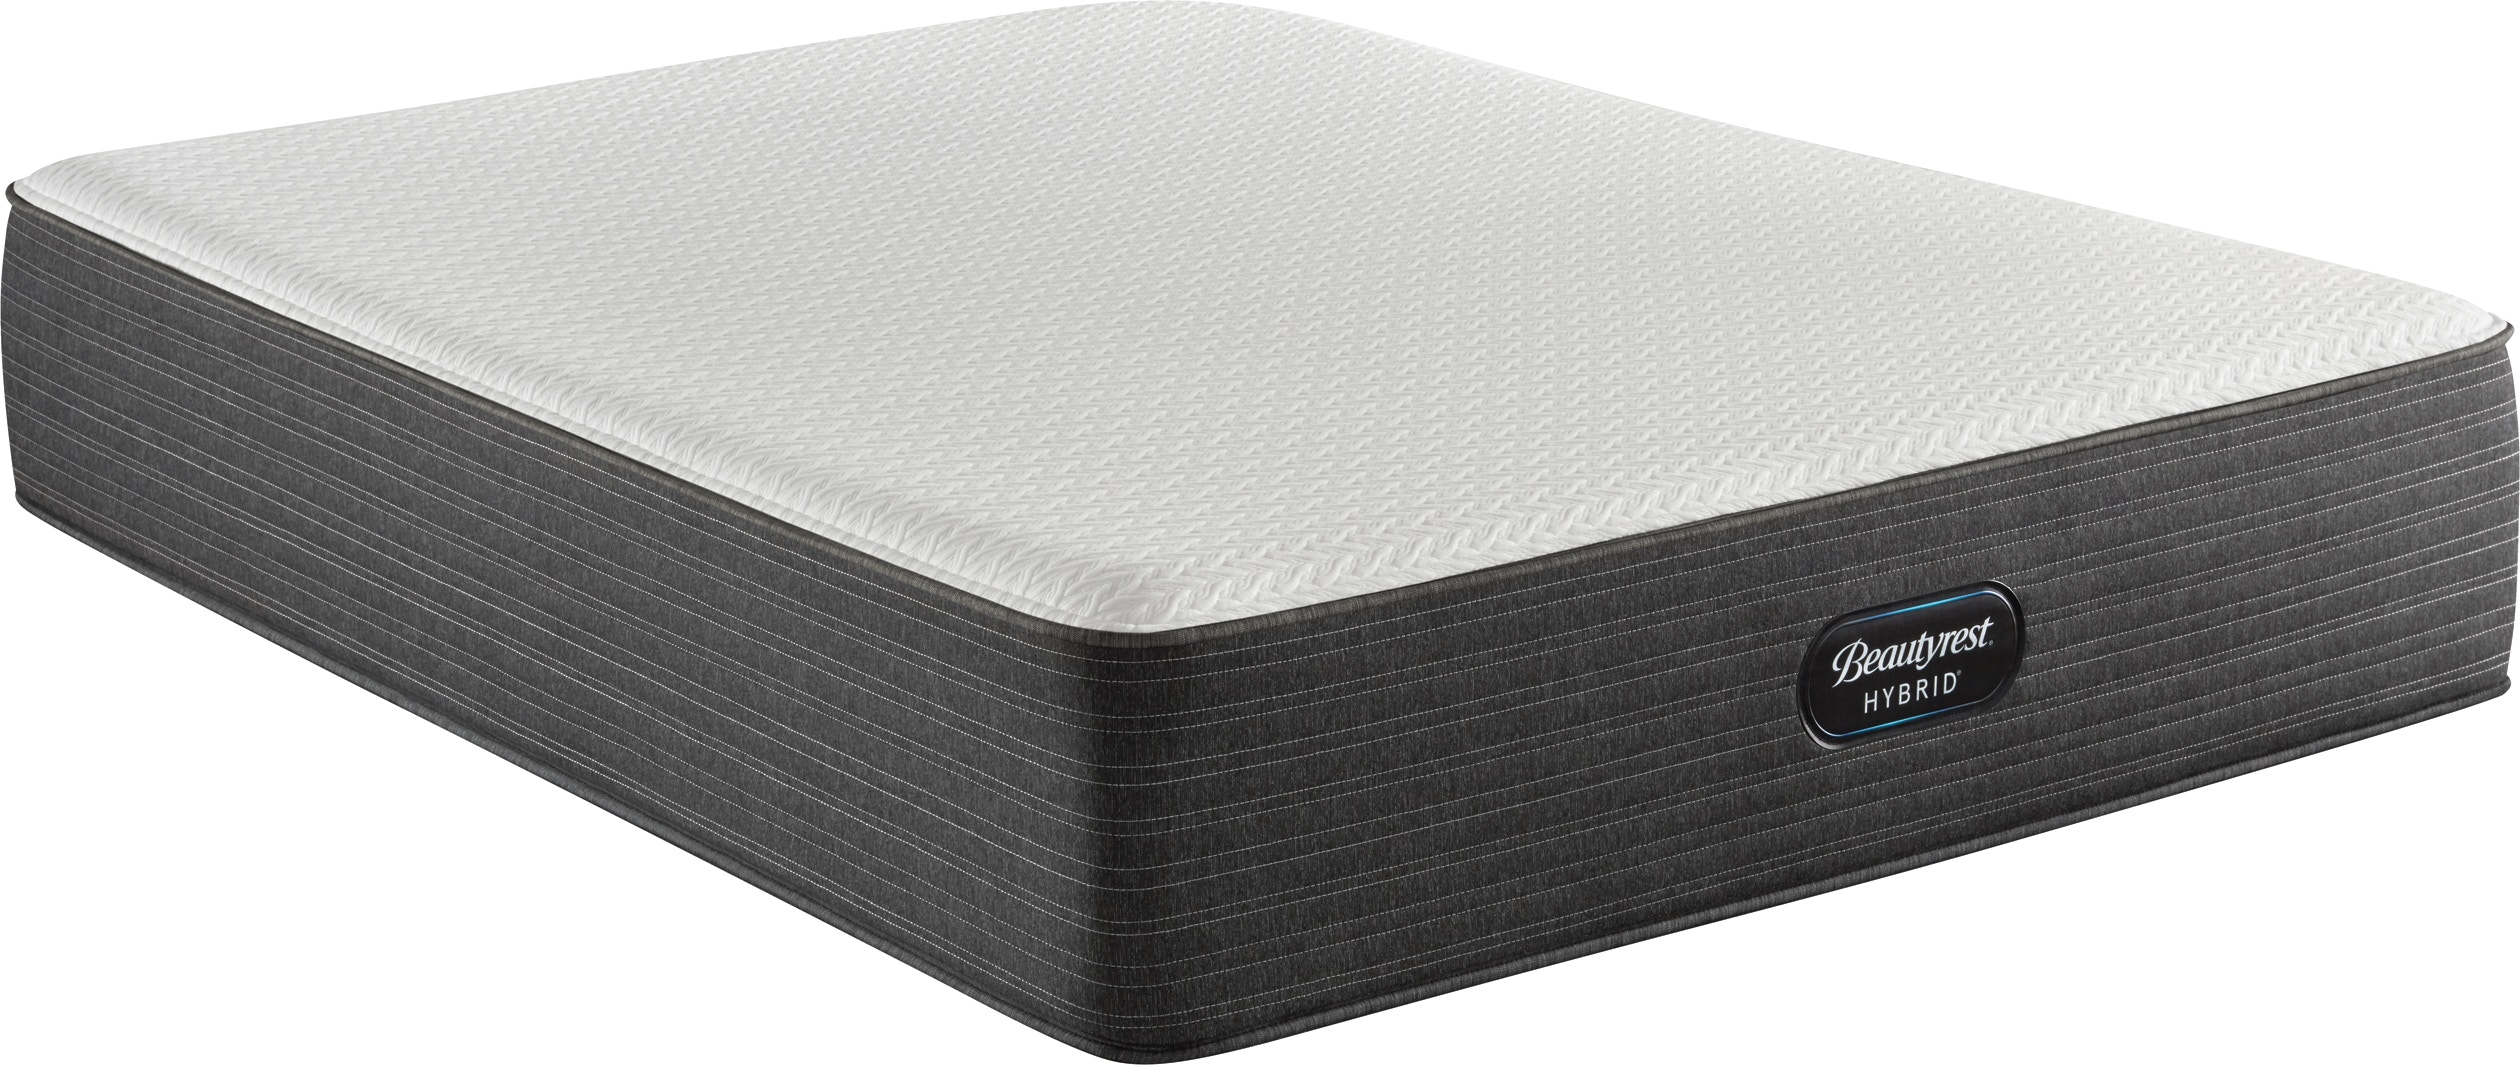 simmons beautyrest hybrid brx1000-c plush mattress stores